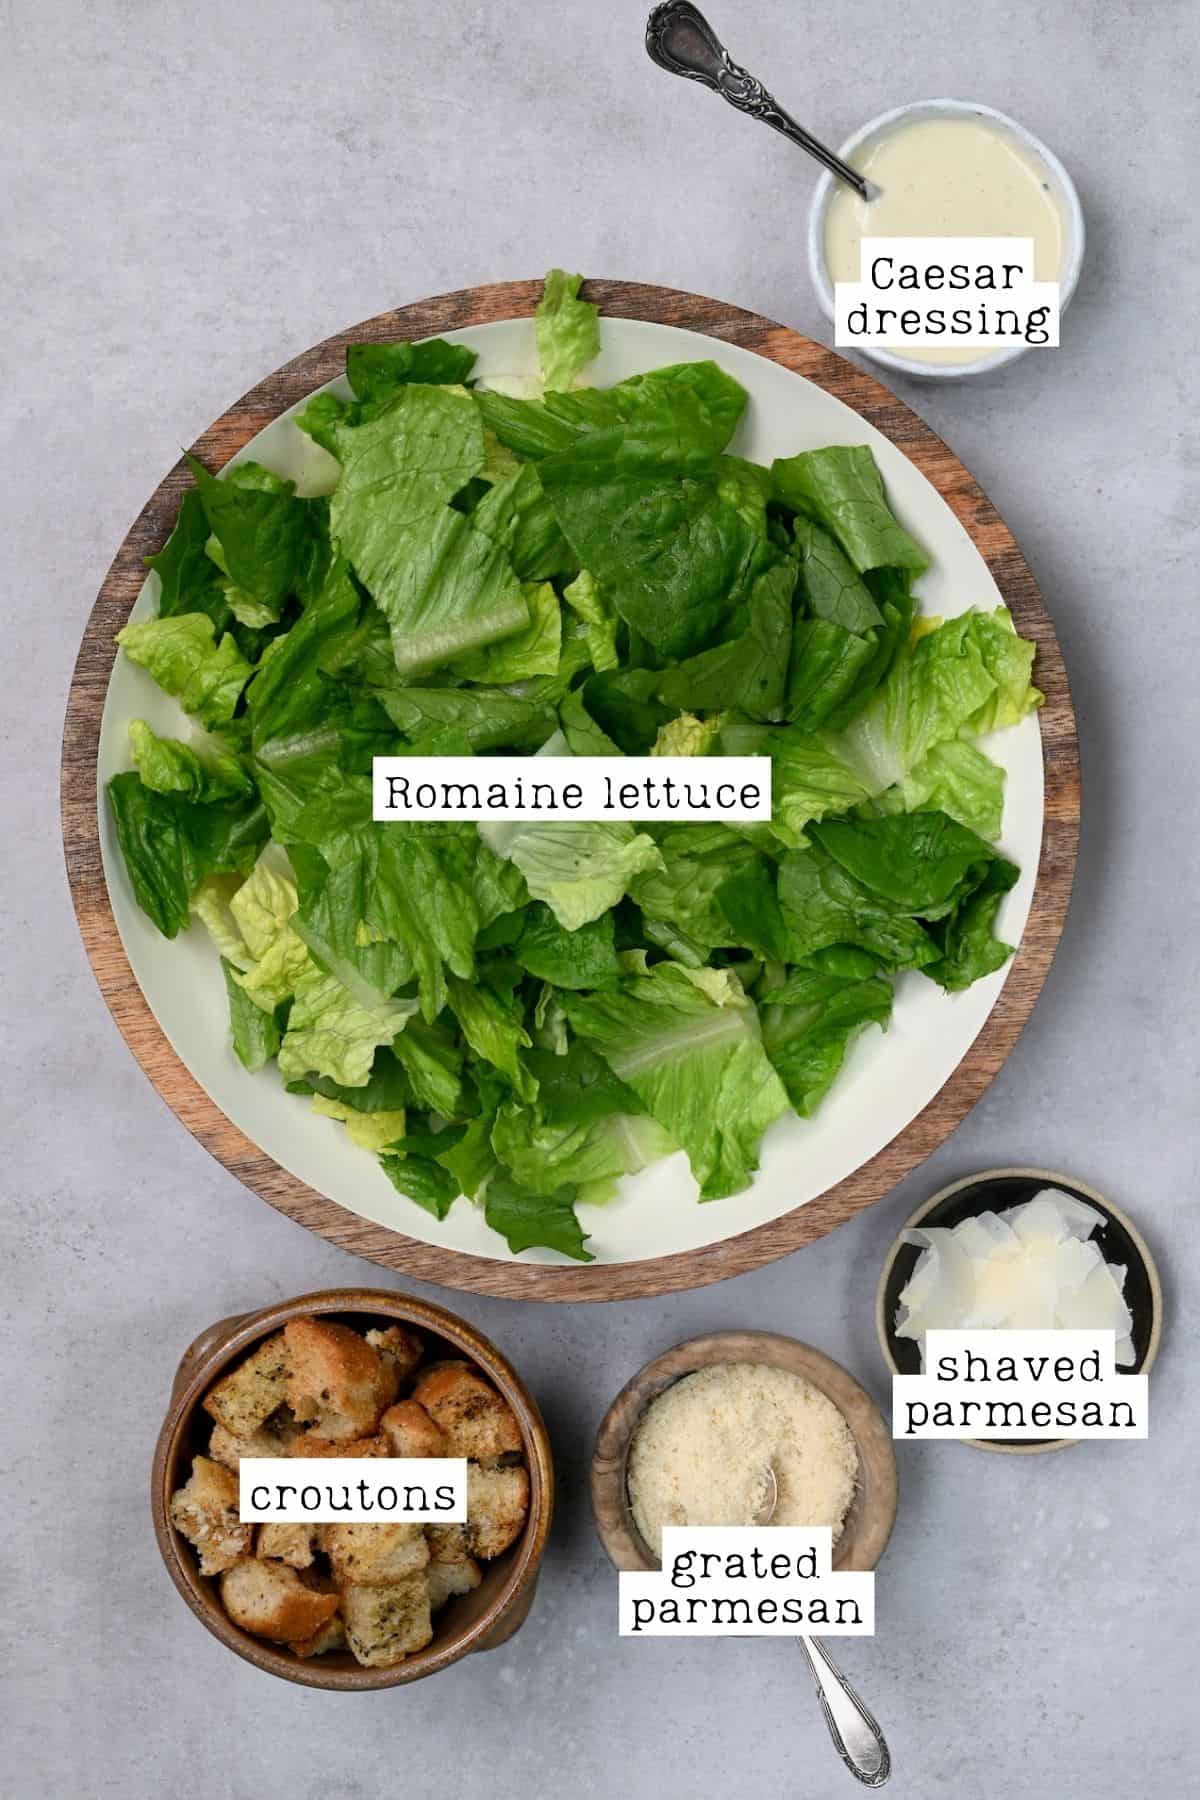 Ingredients for Caesar salad